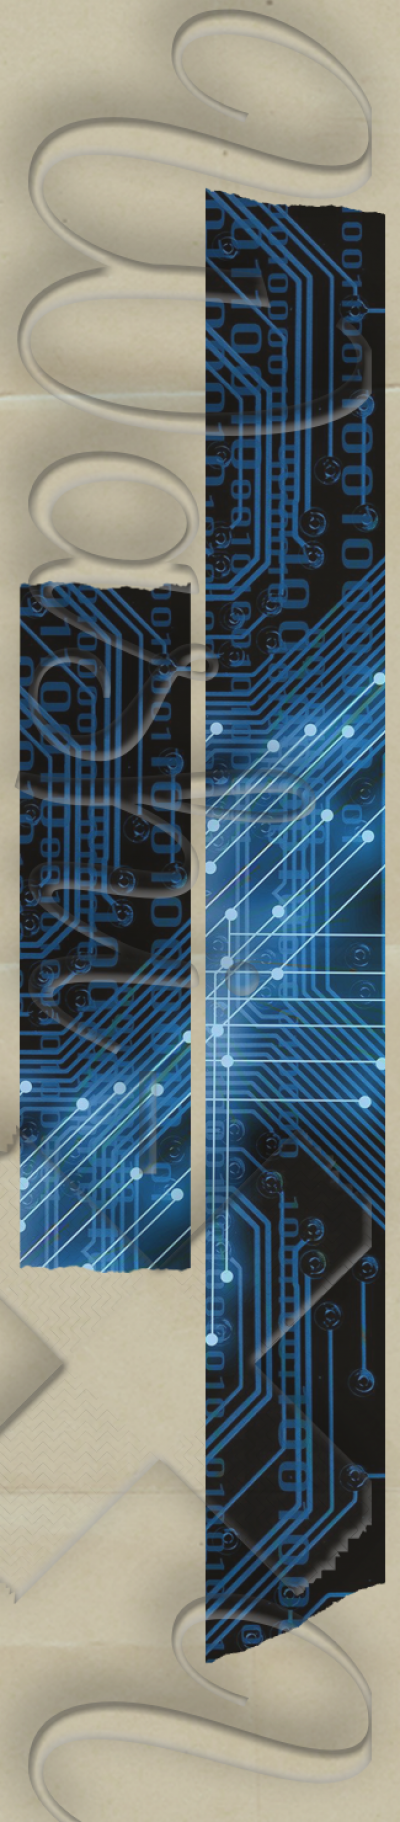 Printed circuit board patterned washi tape